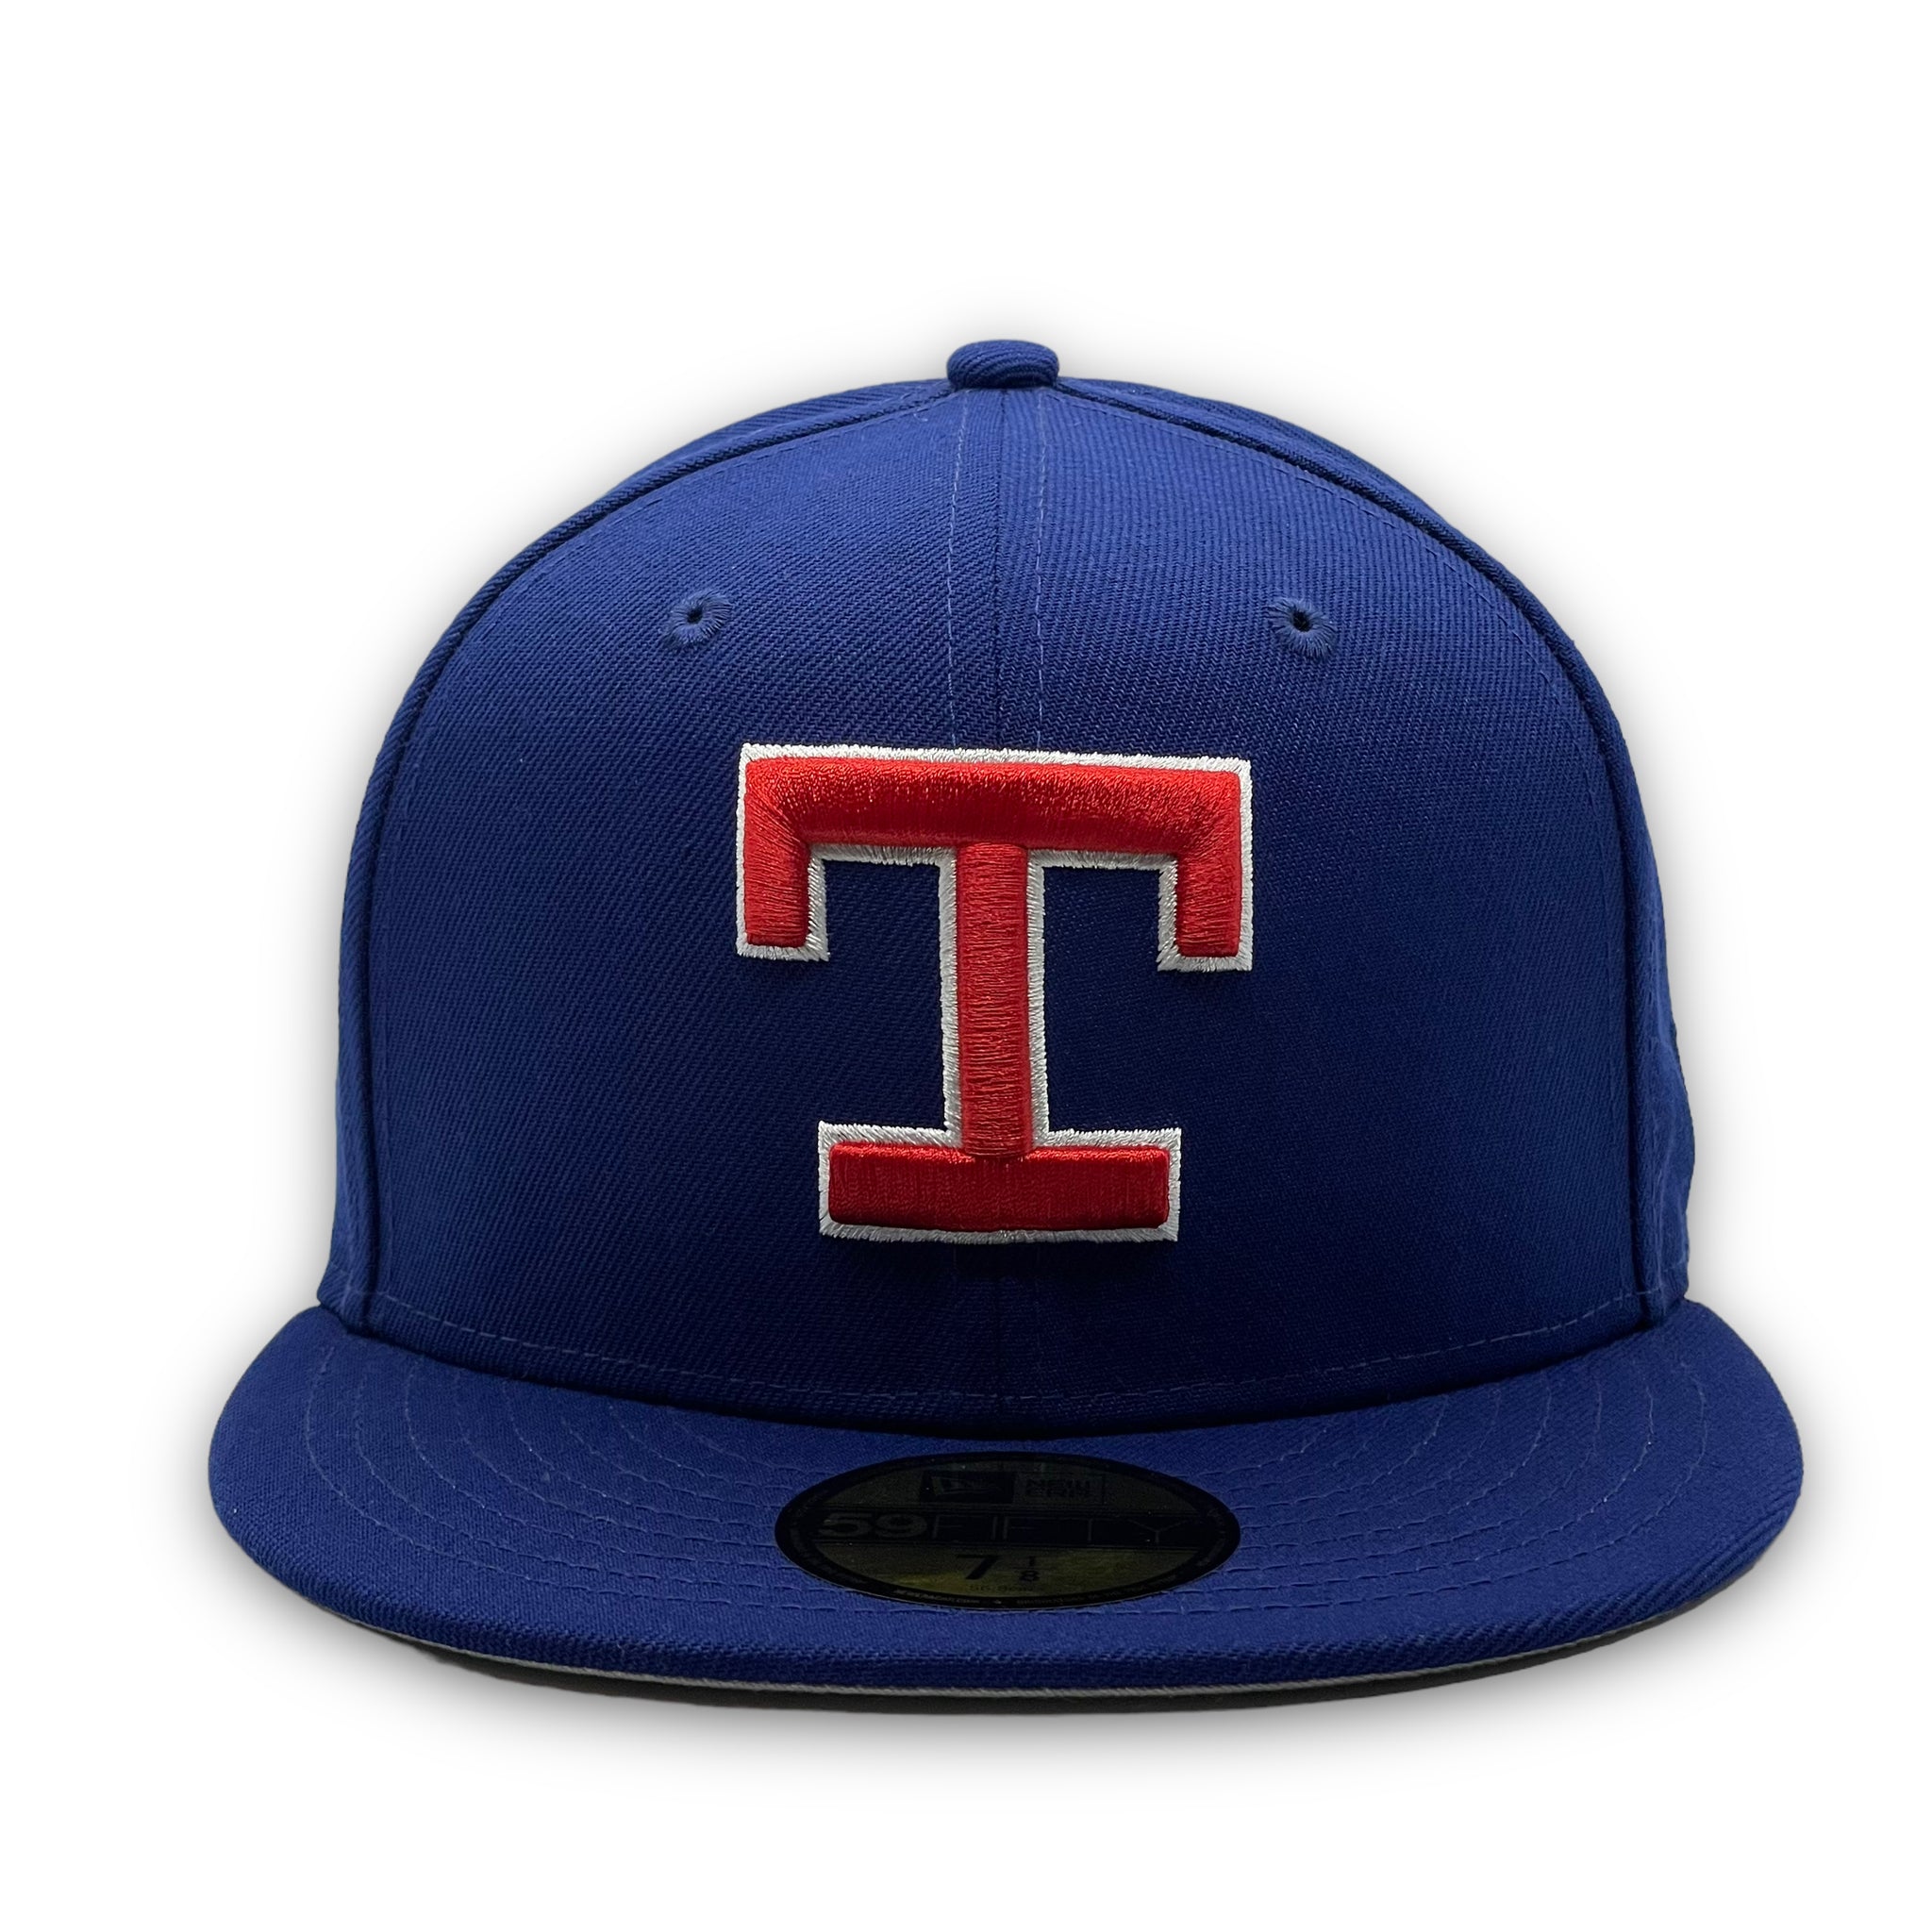 texas rangers throwback hat